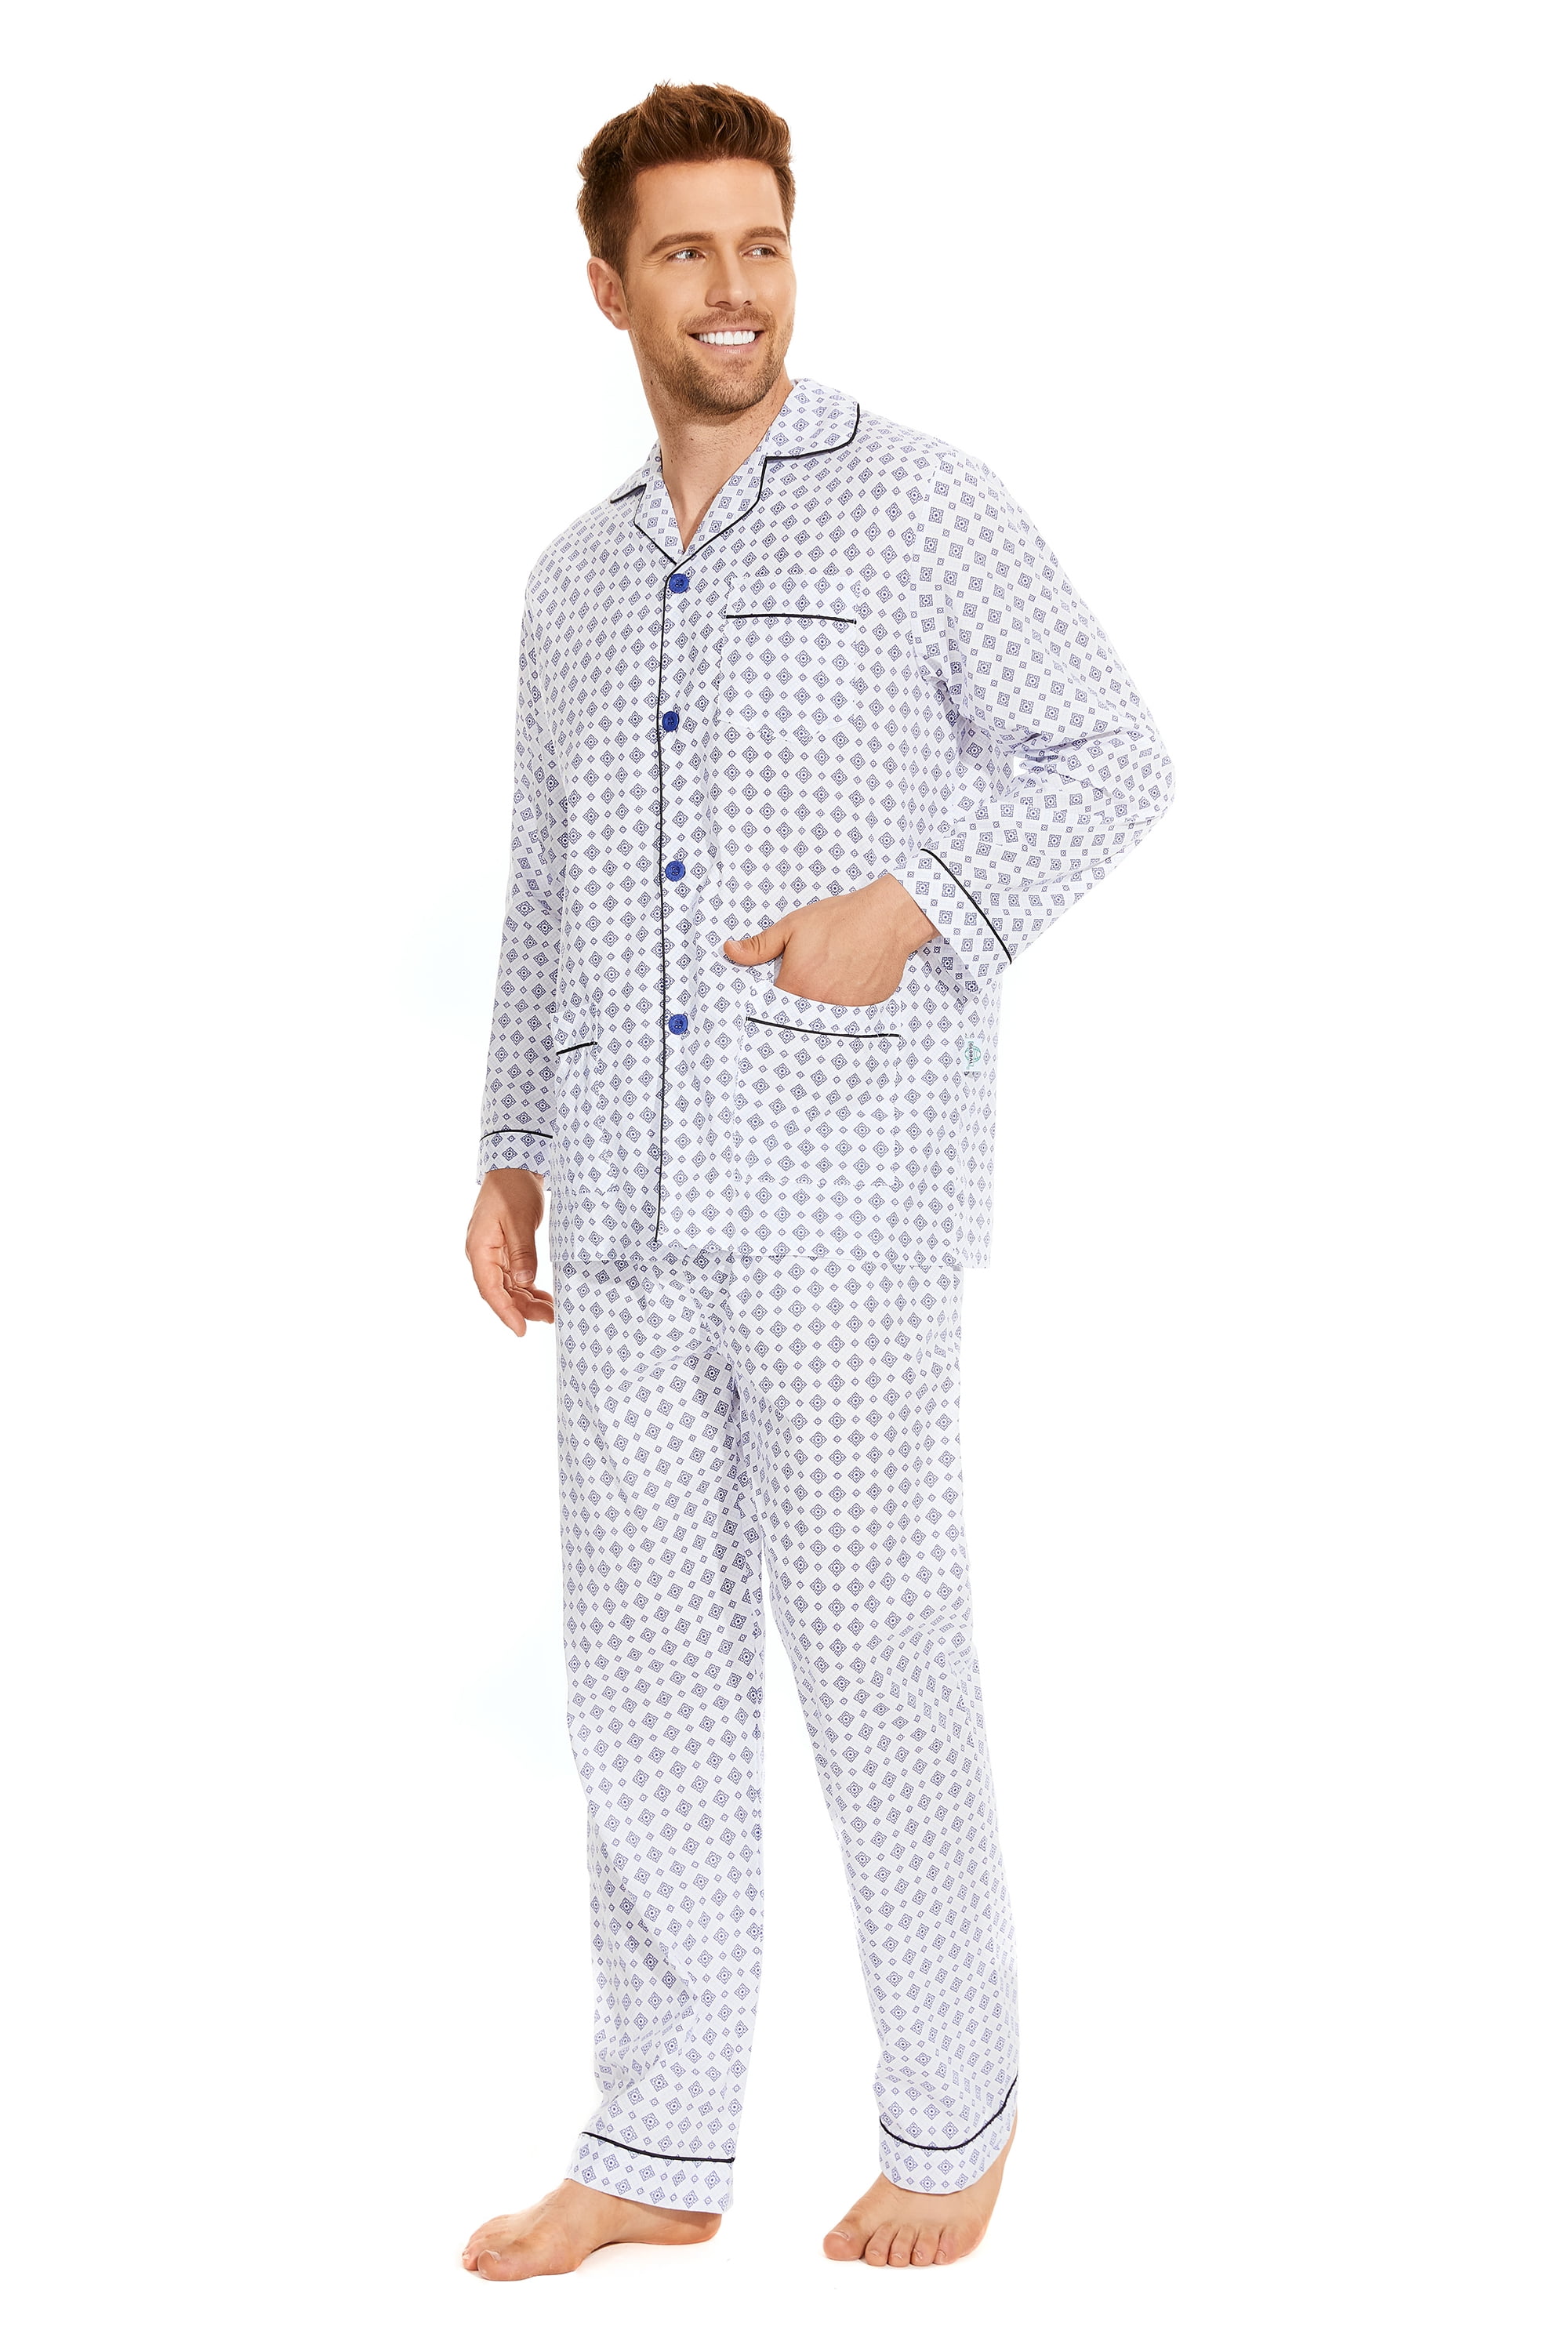 100% Cotton Woven Drawstring Sleepwear Set with Top and Pants/Bottoms GLOBAL Mens Pyjamas Set